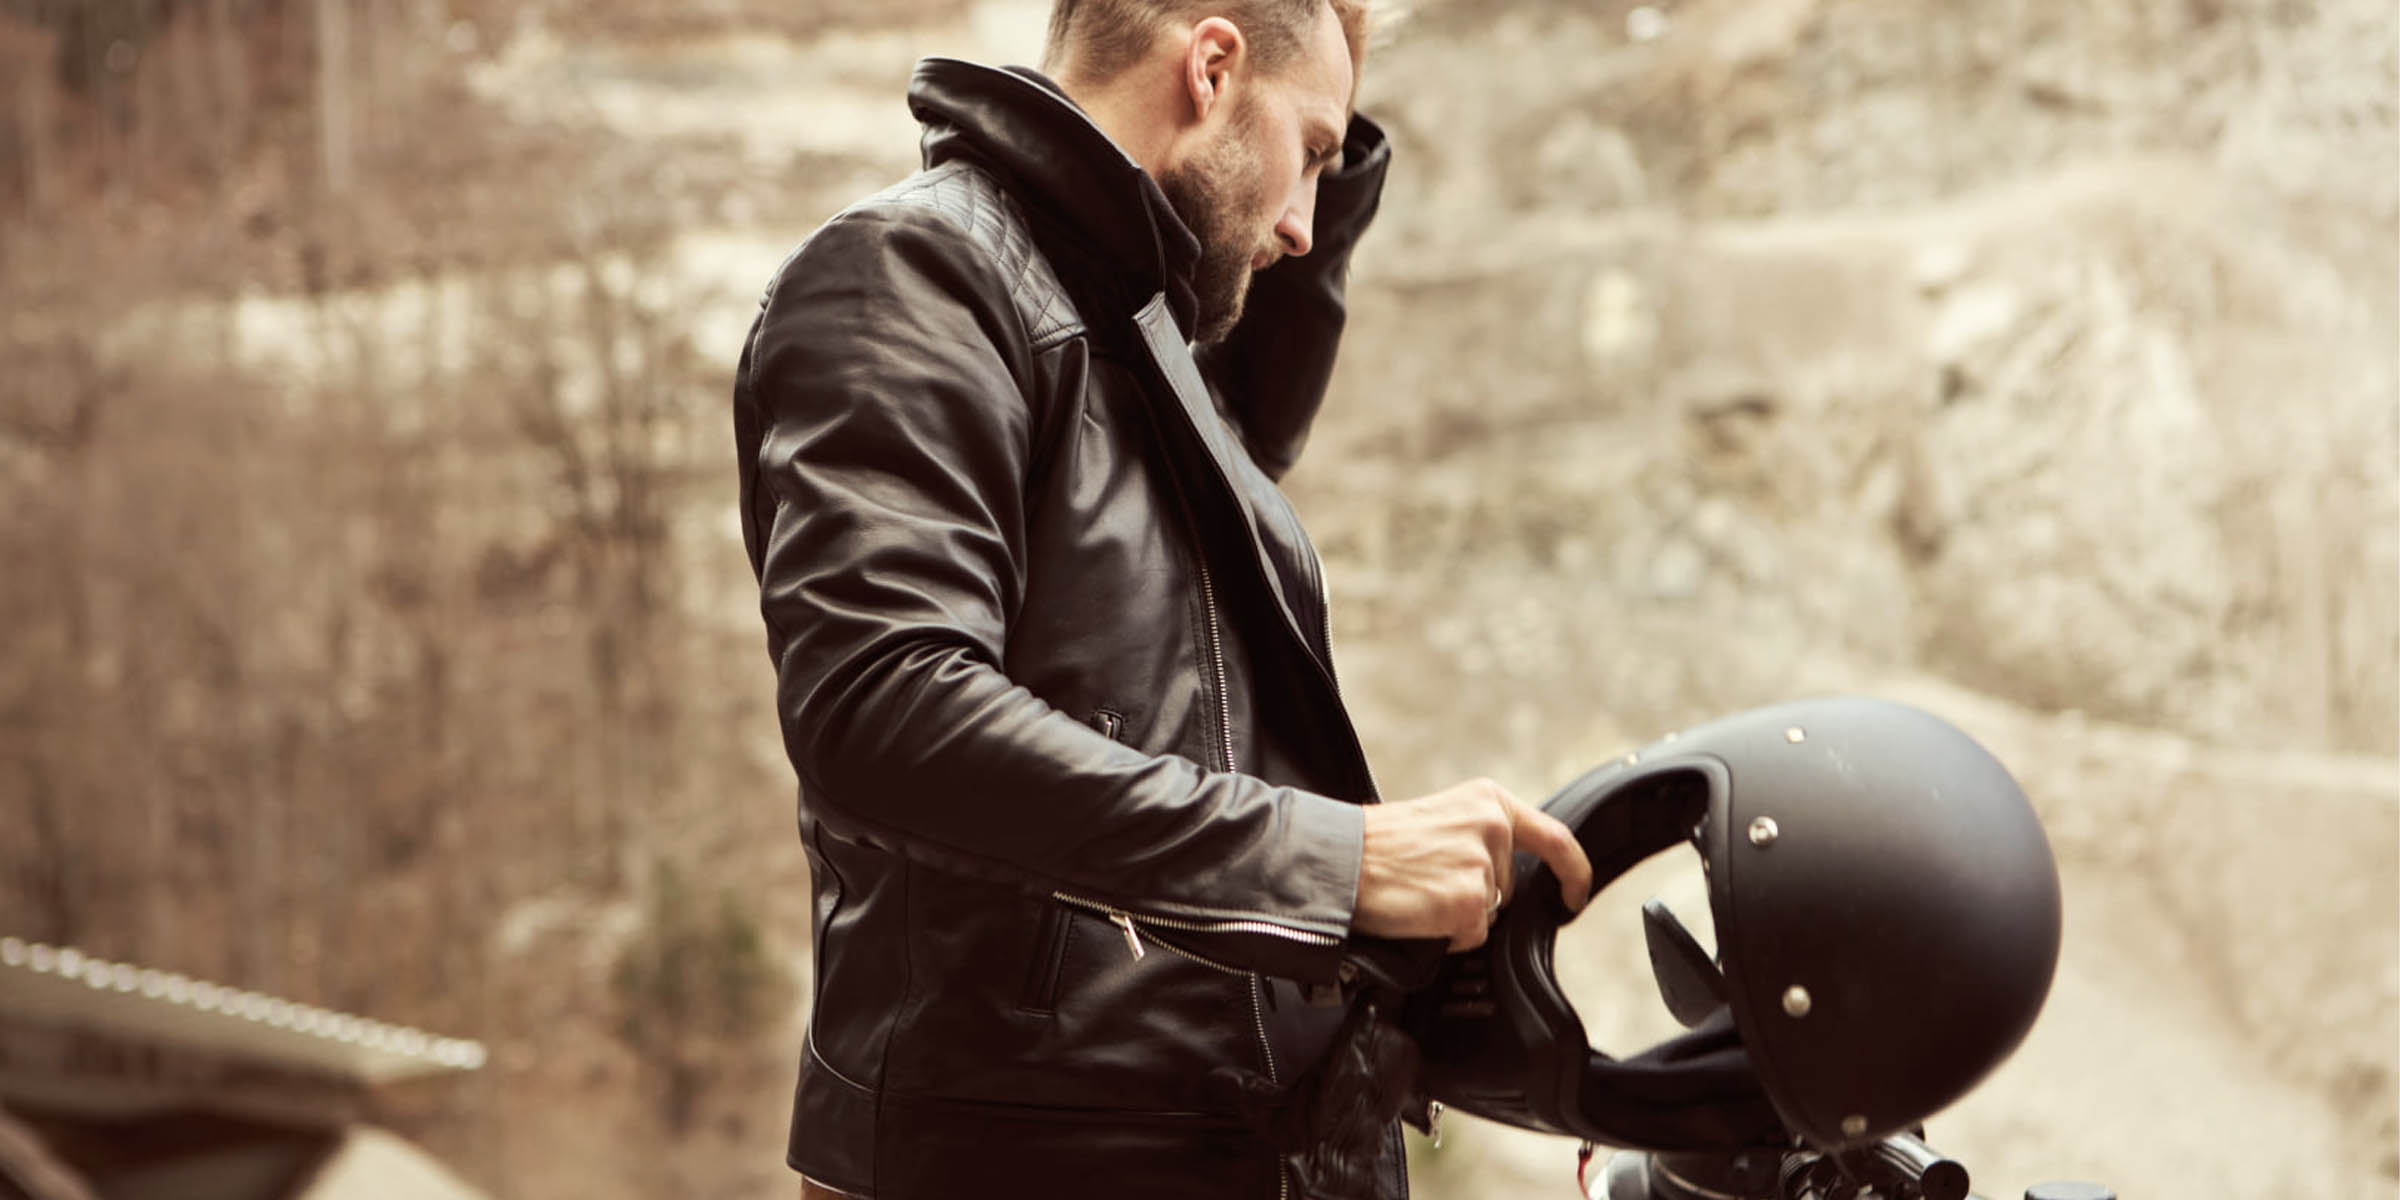 Motorcycle Jacket Motorbike Biker Riding Jacket Protective Breathable CE Armoured Motorcycle jacket for Men Women 